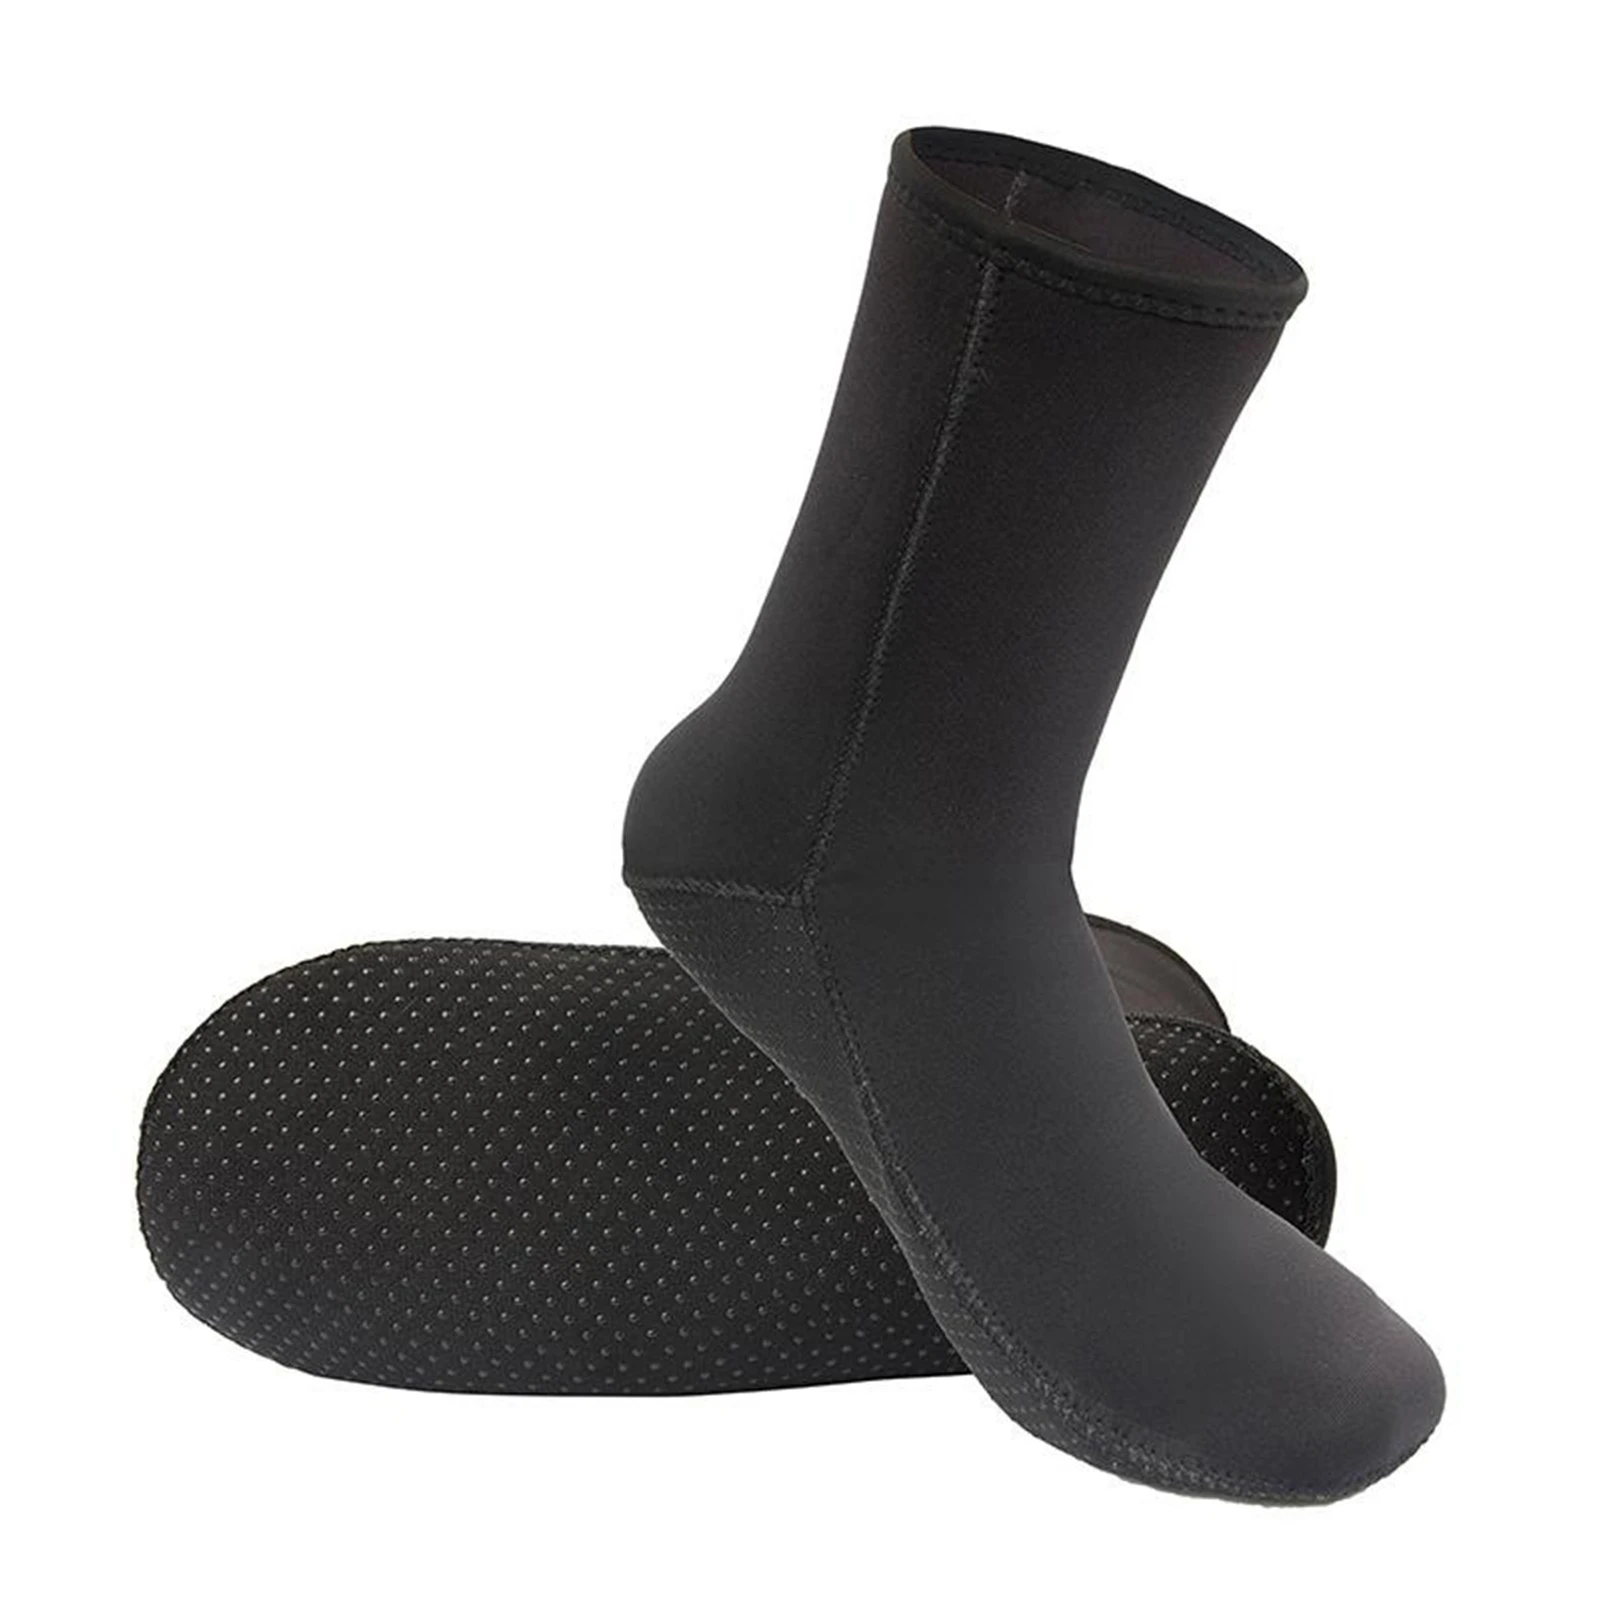 3mm Neoprene Wetsuit Socks Beach Water Sports Keep Warm Sand Protection Socks for Men Women